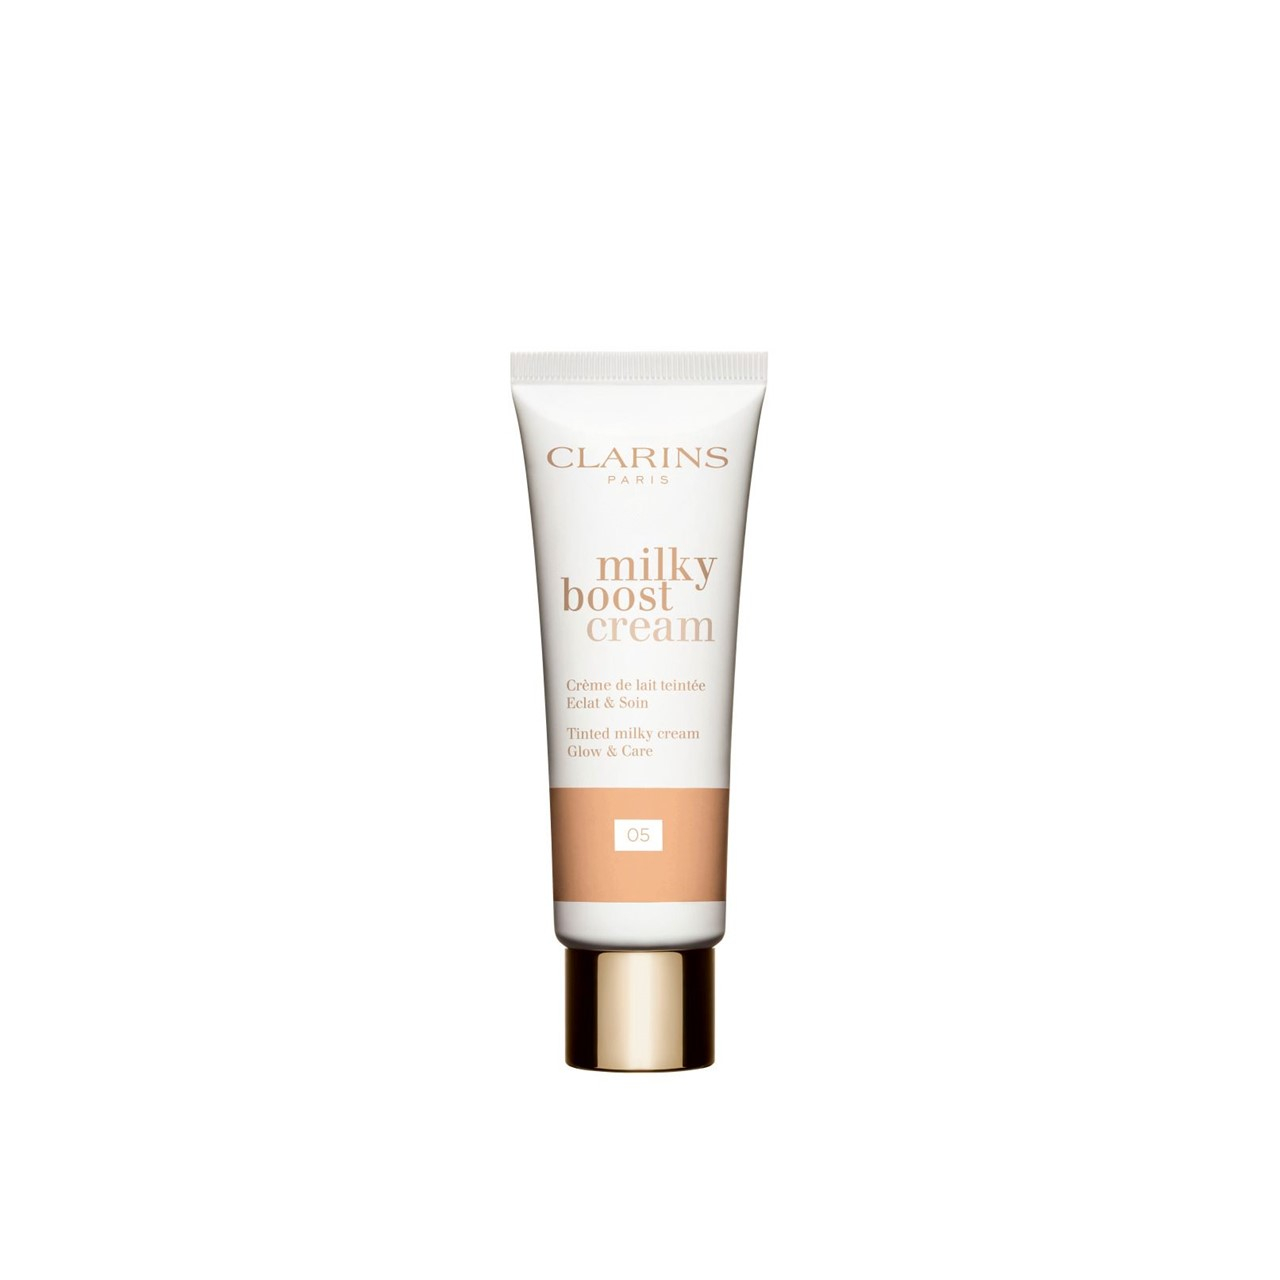 Clarins Milky Boost Cream 05 45ml (1.52fl oz)